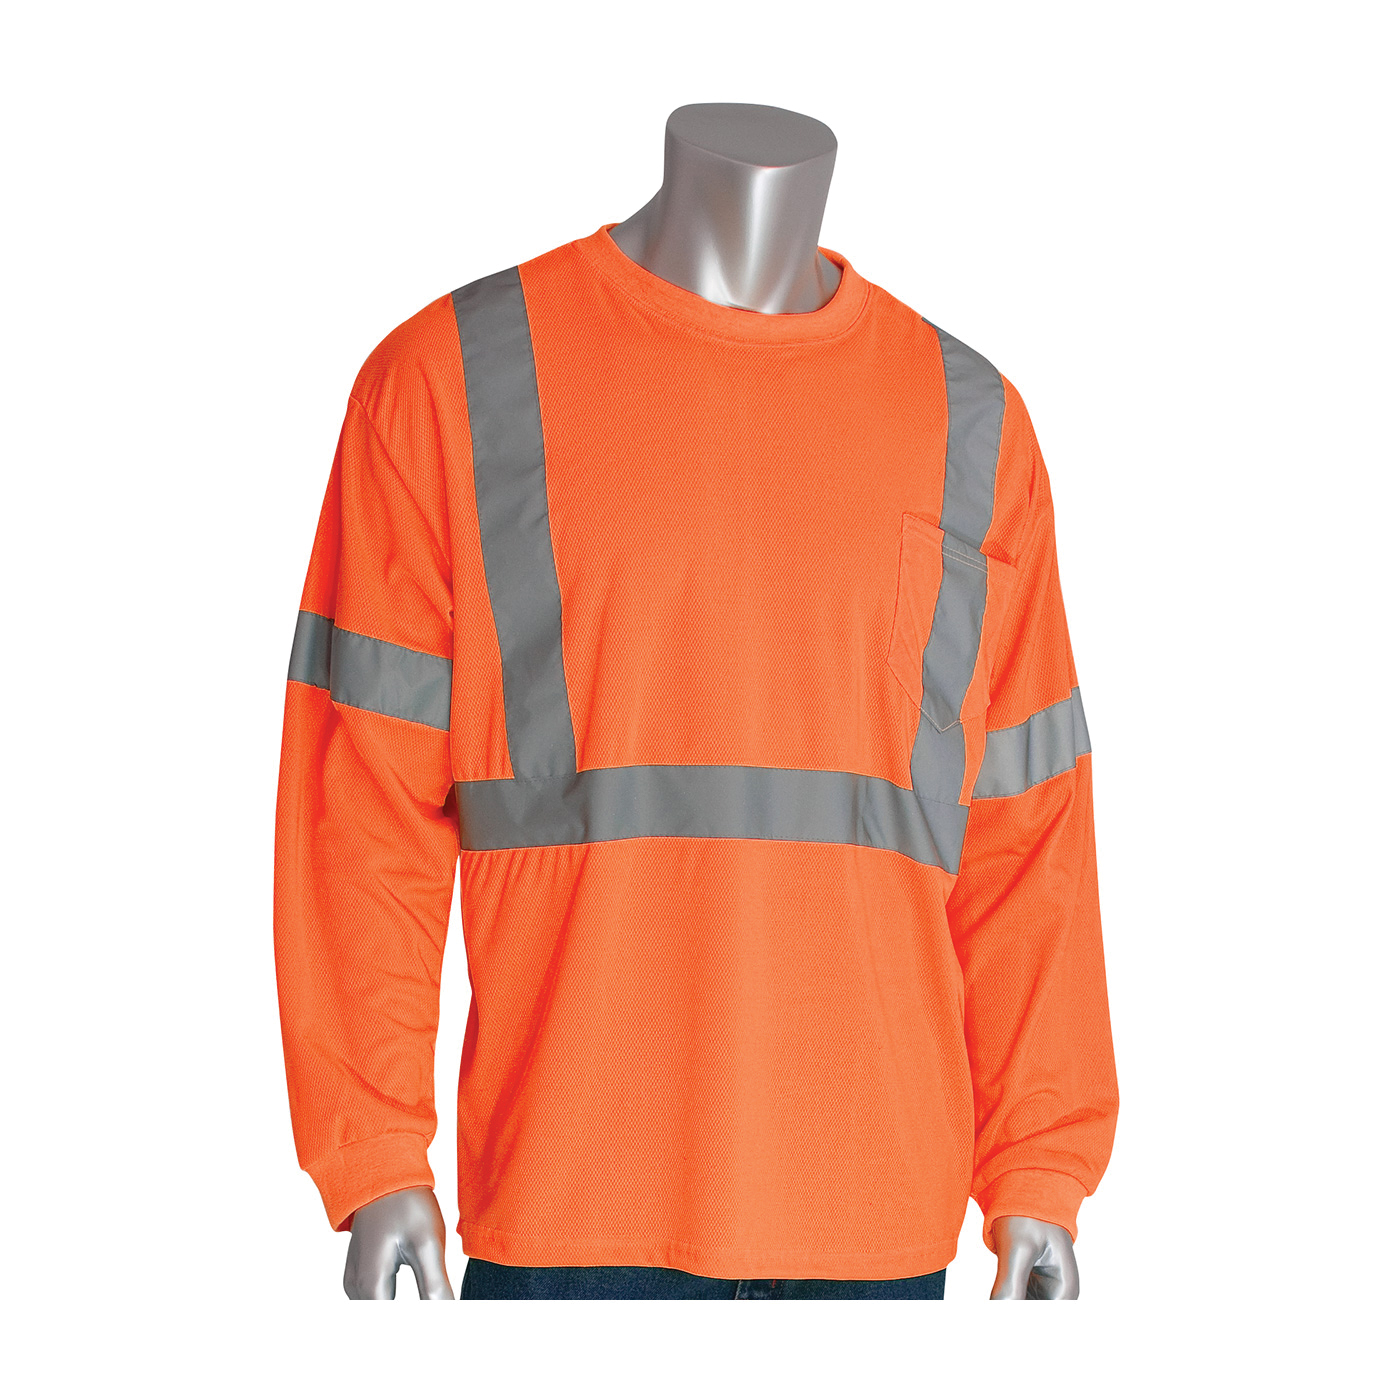 PIP® 313-1300-OR/S Long Sleeve Crew Neck T-Shirt, S, Hi-Viz Orange, Bird's Eye Polyester, 27-1/2 in L